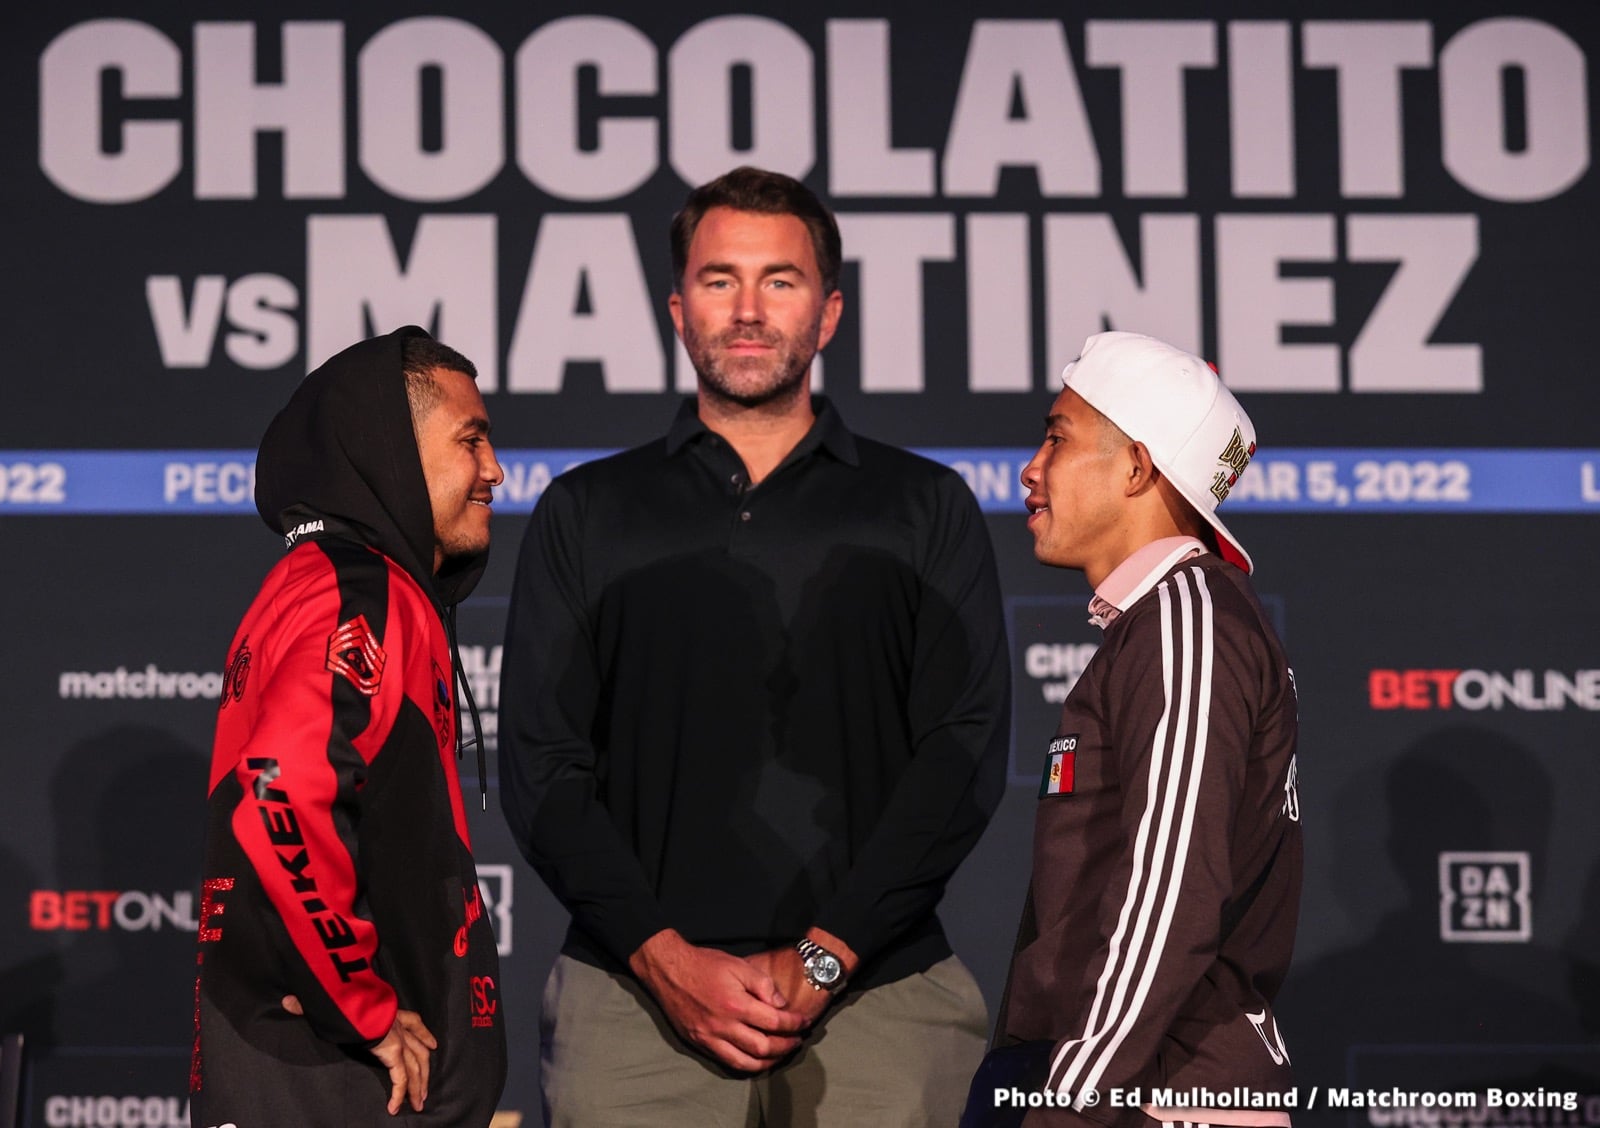 Image: Chocolatito vs. Martinez DAZN press conference quotes & photos